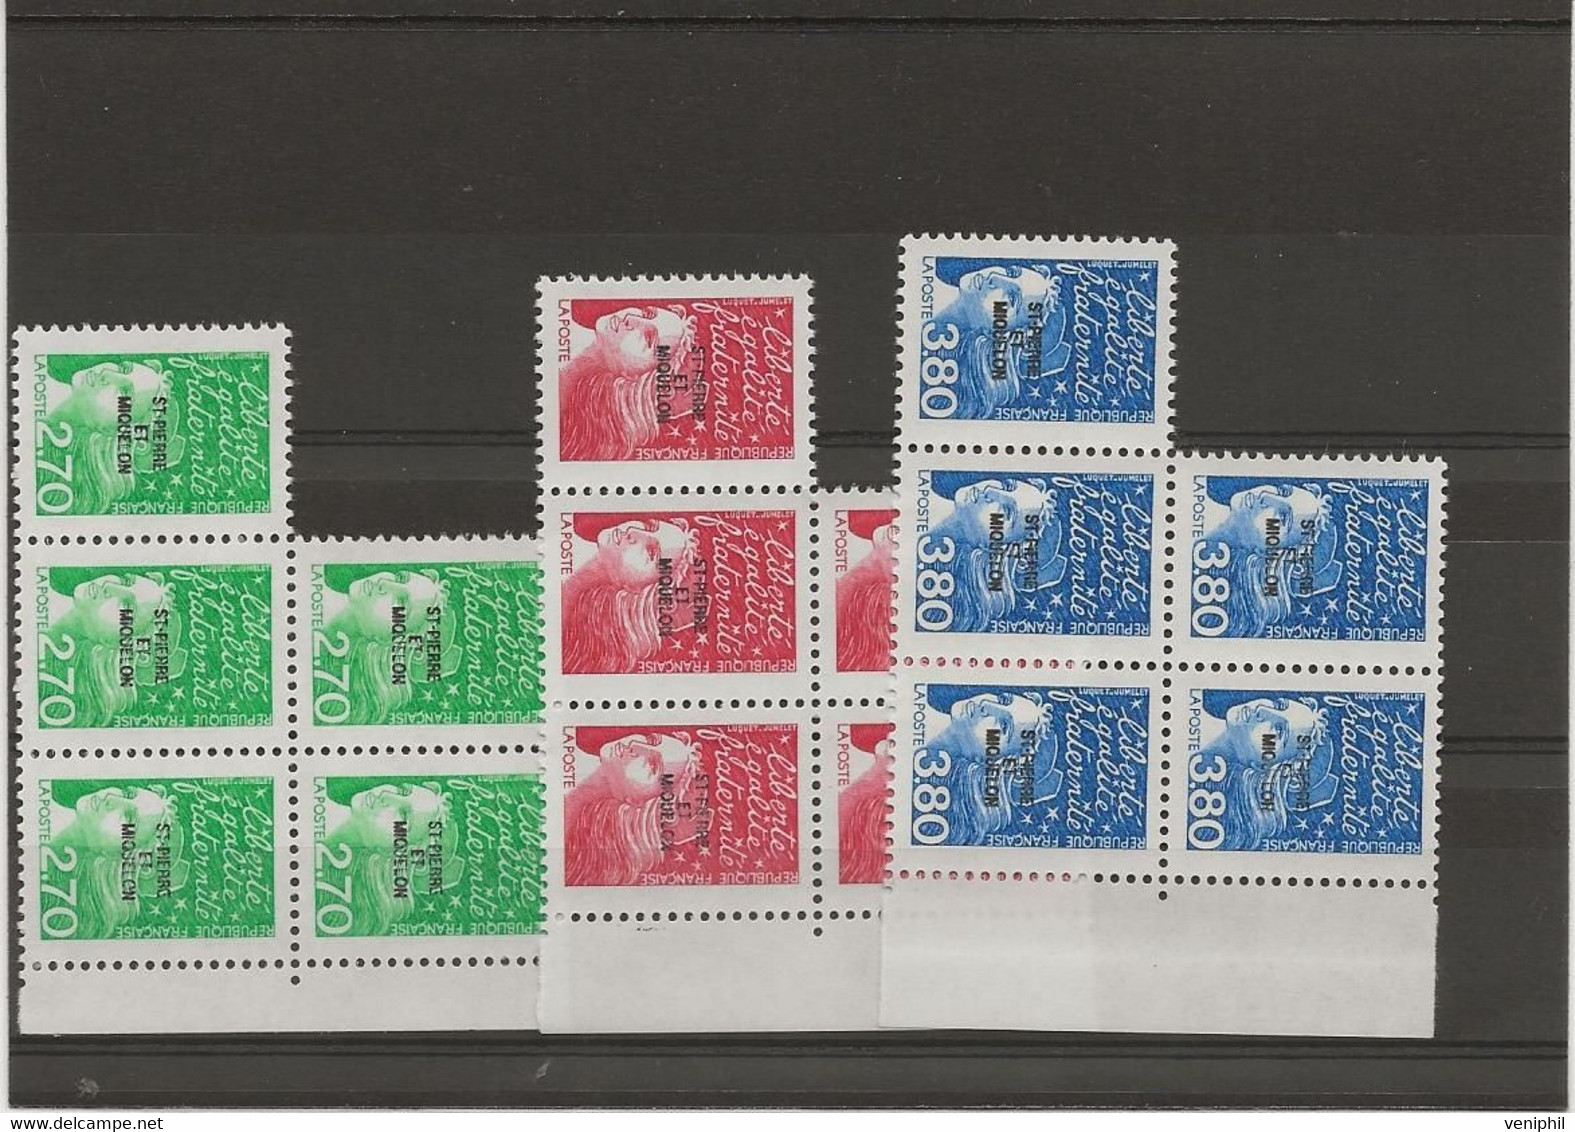 ST PIERRE ET MIQUELON -   SERIE COURANTE  N° 650 A 652 -5 EXEMPLAIRES NEUF SANS CHARNIERE -ANNEE 1997 - COTE : 21,50 € - Unused Stamps